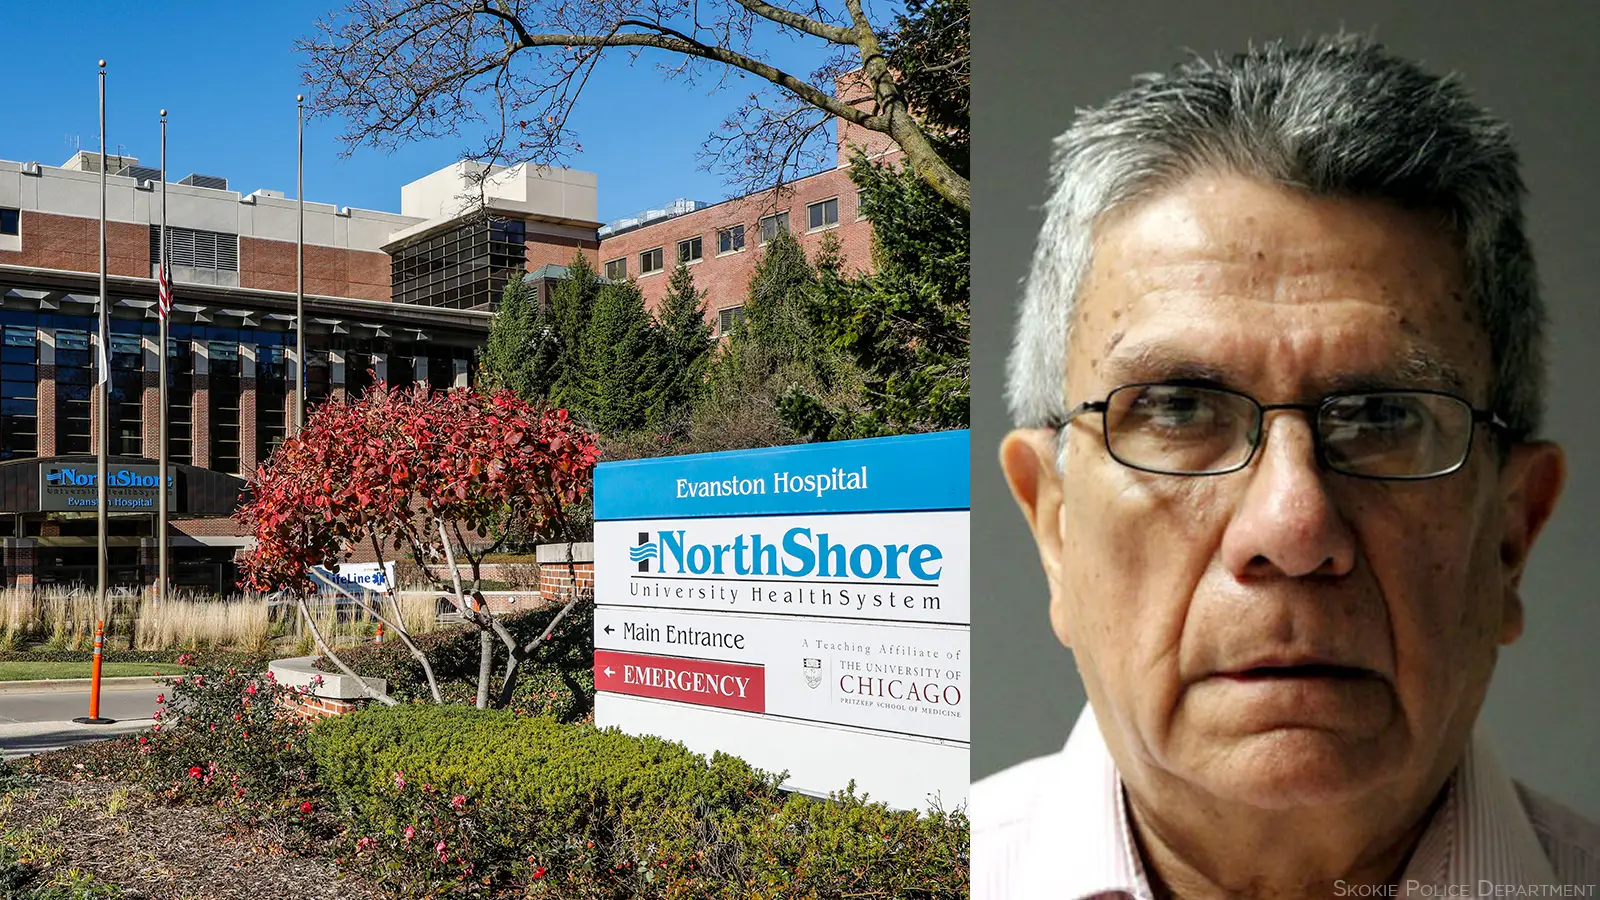 Jane Doe 41 alleges sexual assault by Gynecologist Fabio Ortega, NorthShore University HealthSystem